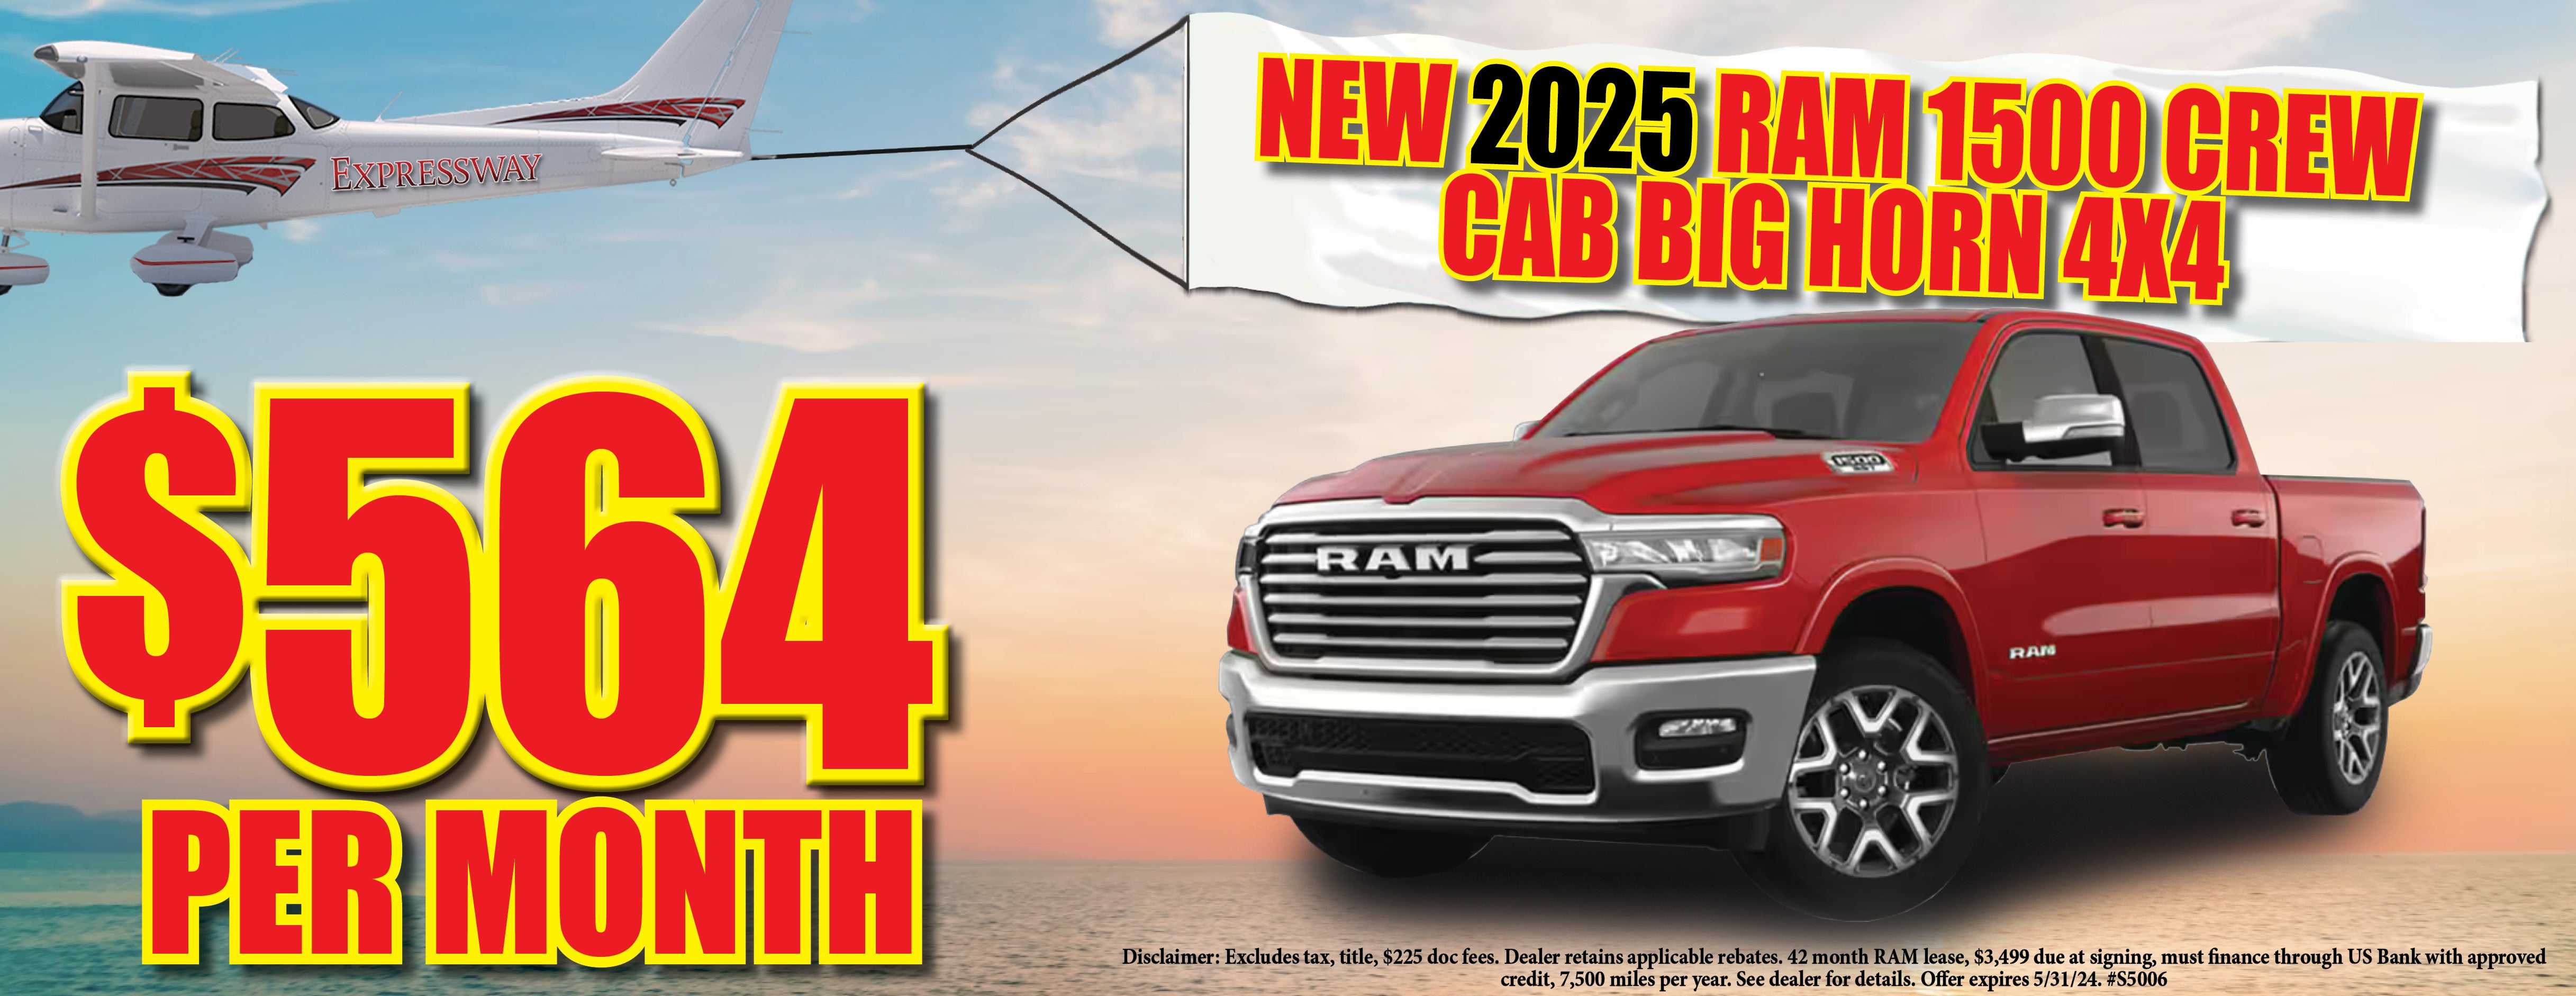 2025 RAM 1500 Crew Cab Bighorn 4x4